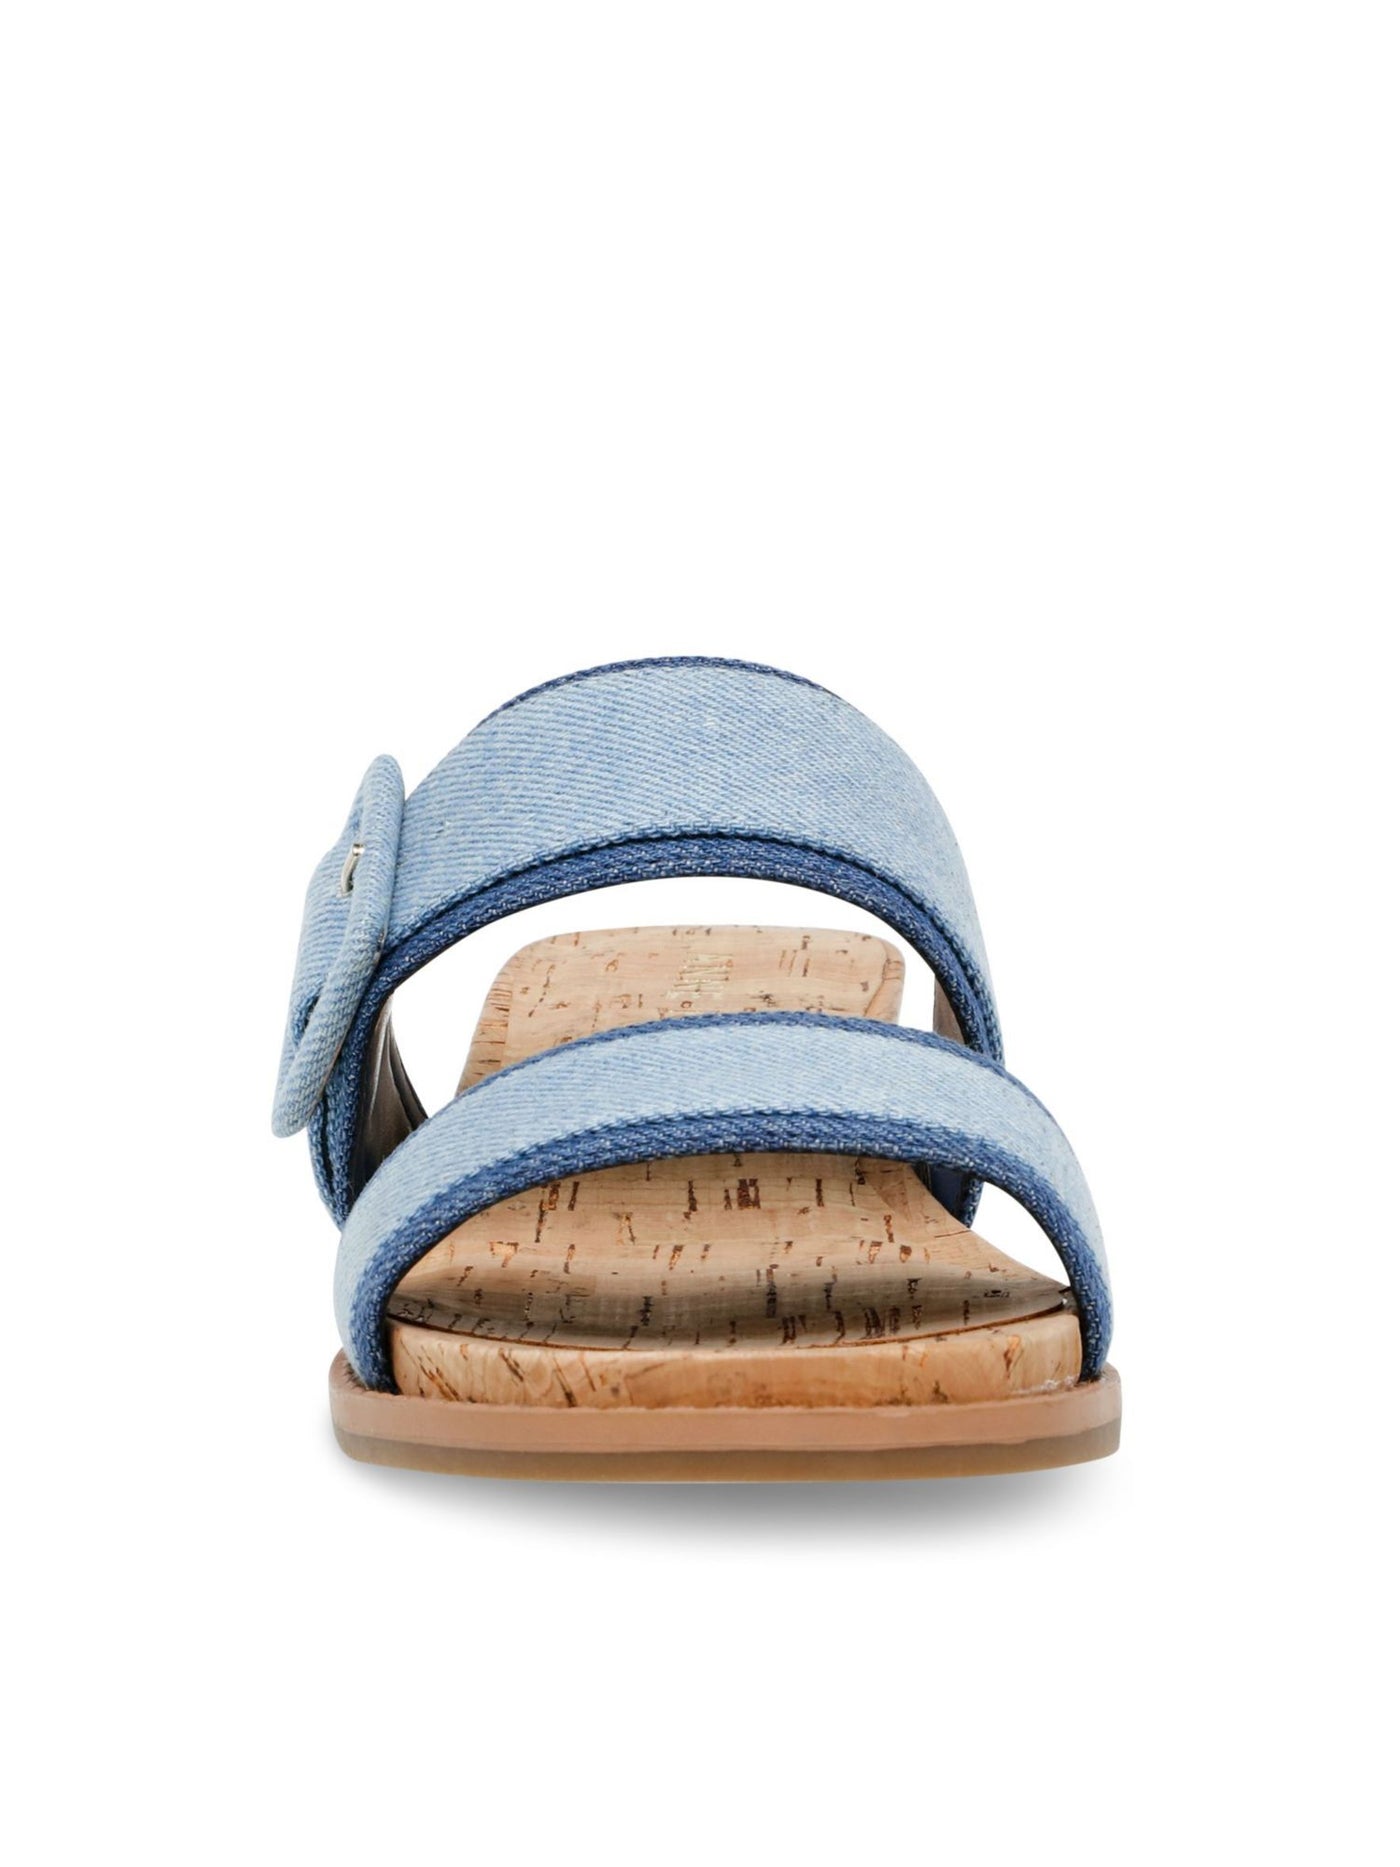 ANNE KLEIN Womens Blue Buckle Accent Comfort Brenda Round Toe Wedge Slip On Slide Sandals Shoes 7.5 M